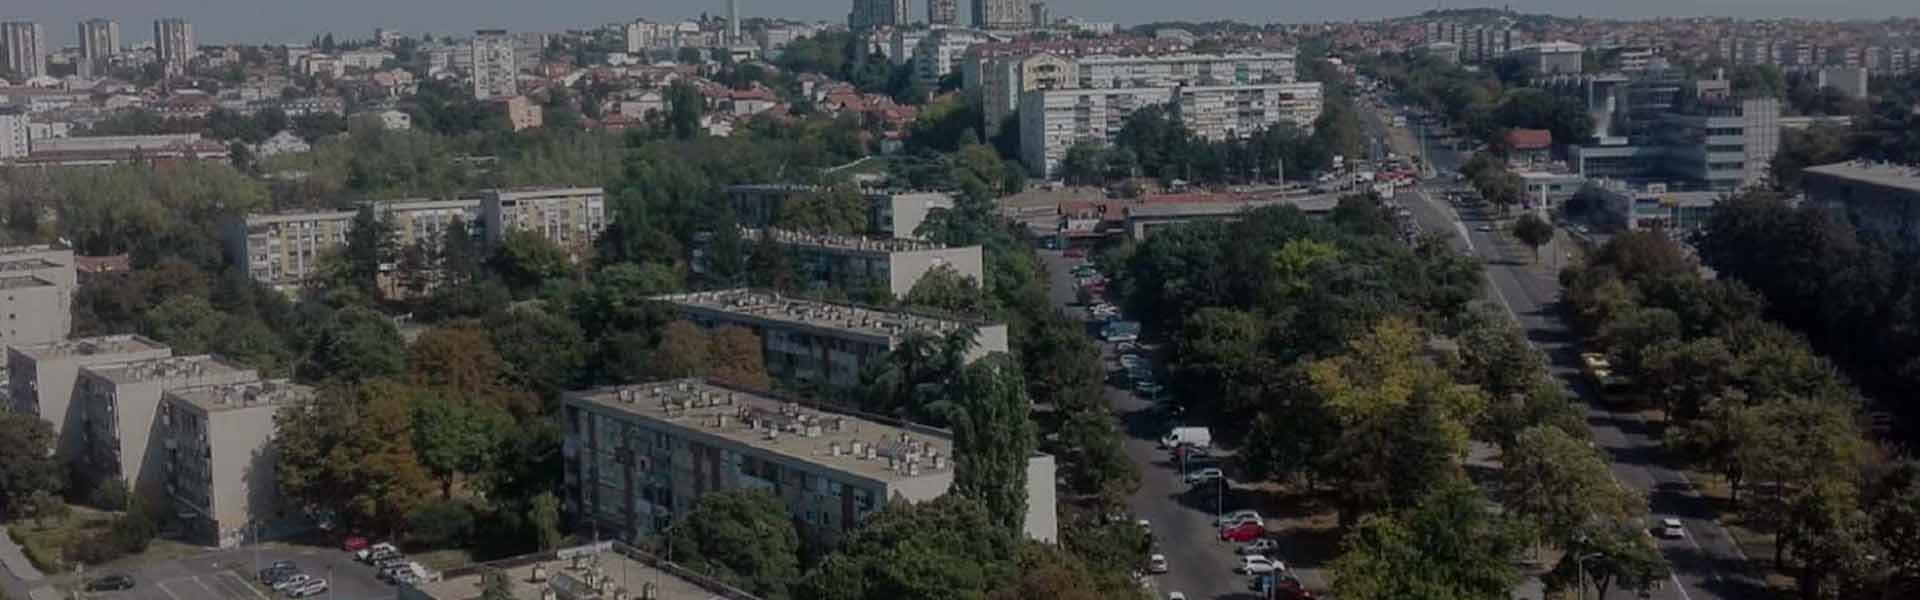 Rent a car Beograd | Šumice